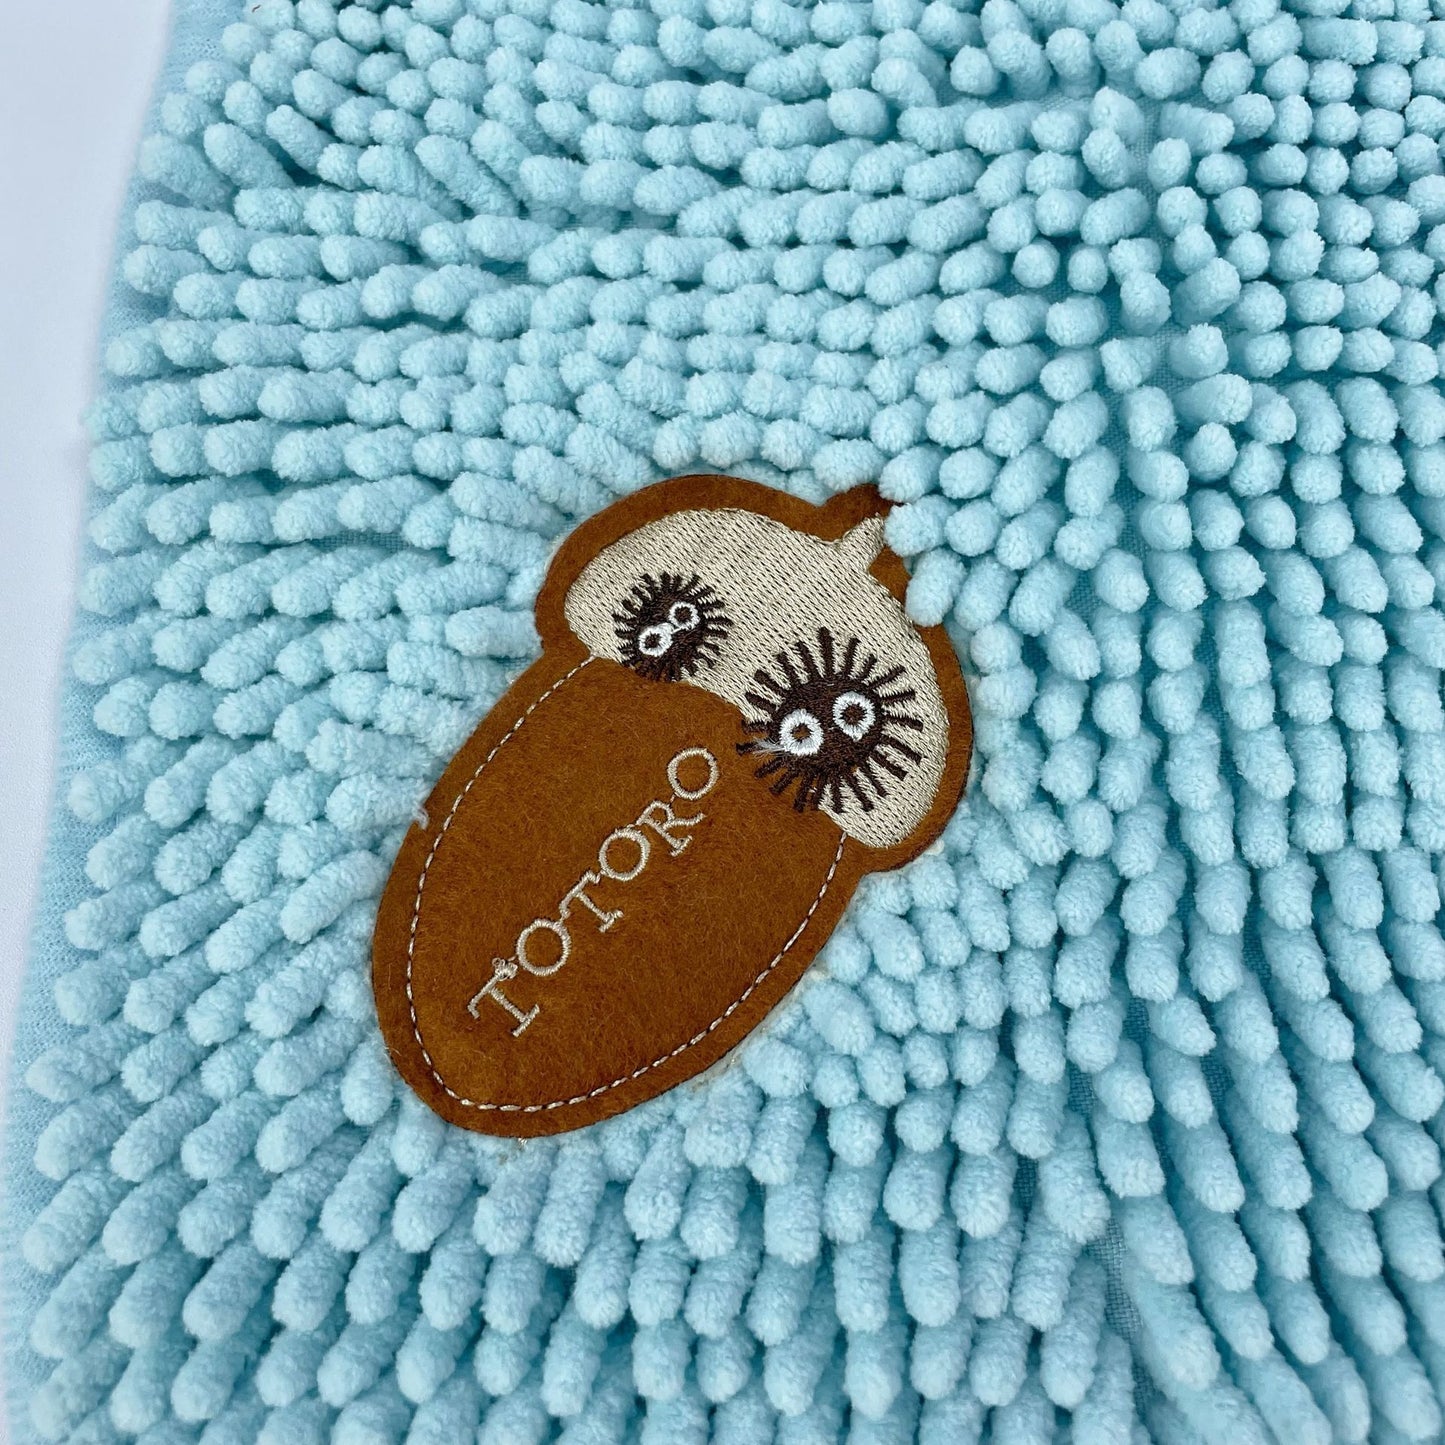 PickMeYA Totoro Cartoon Embroidered Bath Mat - Bathroom and Kitchen Absorbent Floor Mat, Quick-Drying, Thick, Soft, and Absorbent Door Mat for Floors